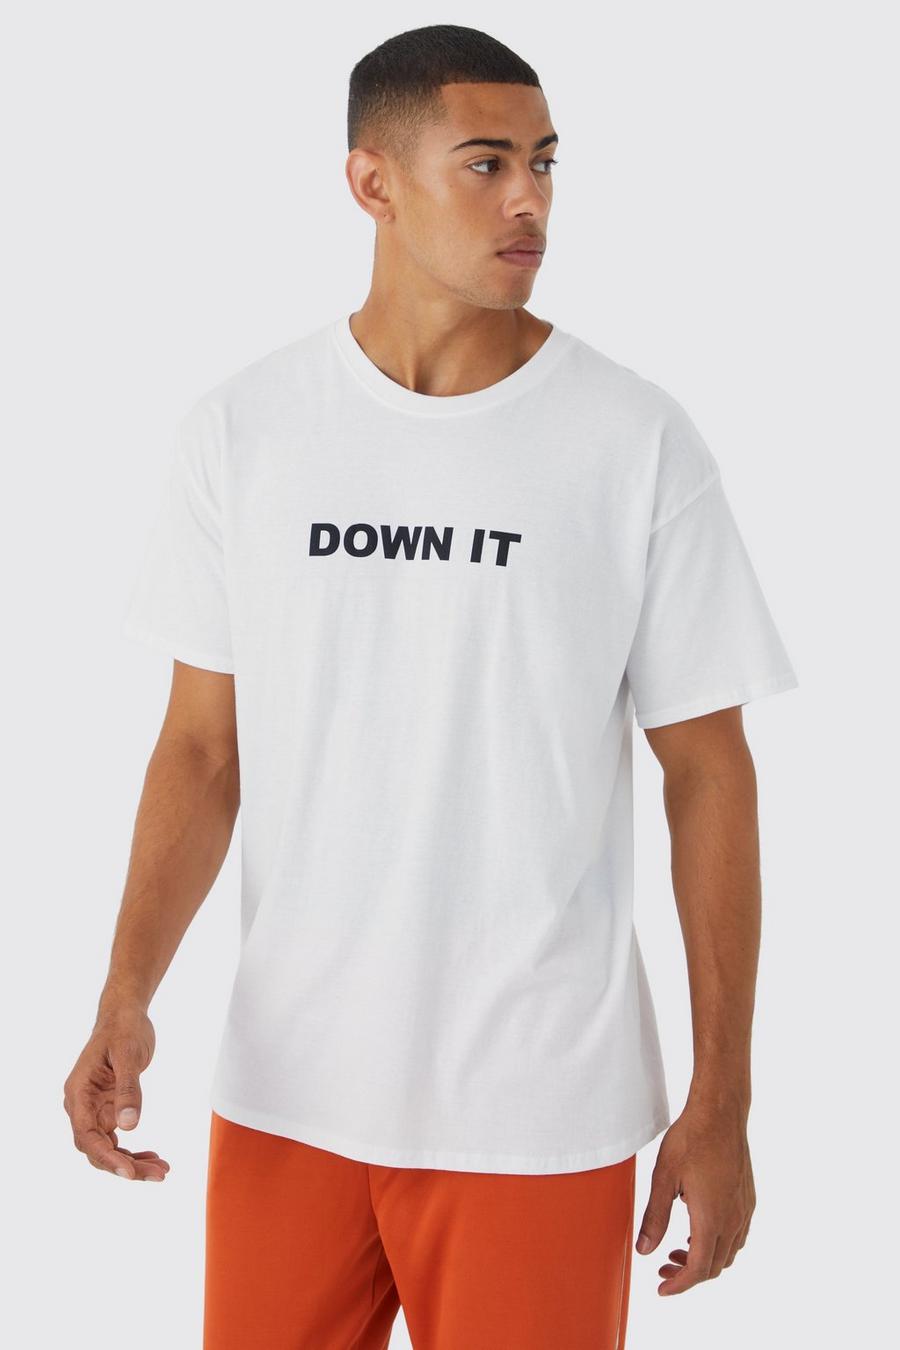 Oversize T-Shirt mit Student Slogan, White image number 1